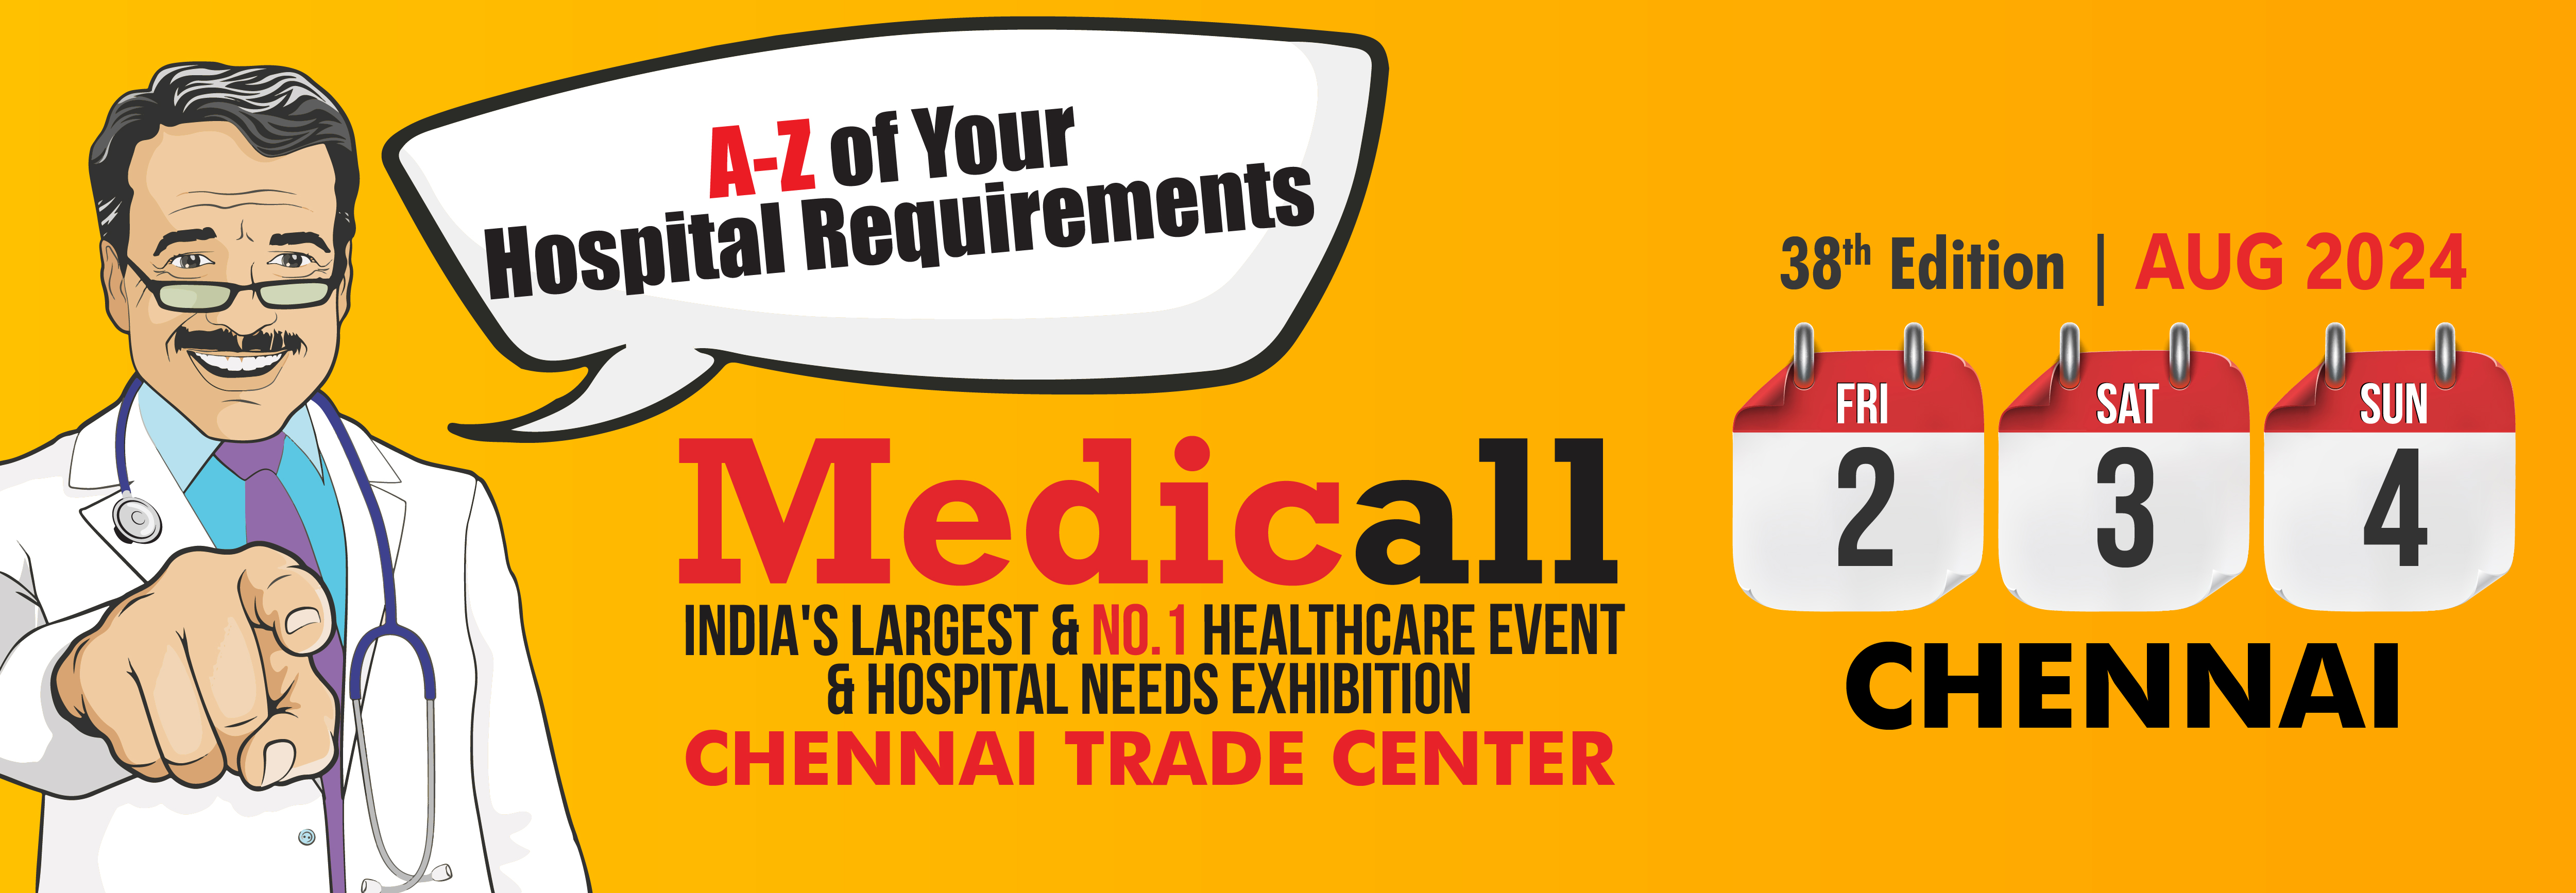 Medicall - India's Largest Hospital Equipment Expo - 38th Edition, Chennai, Tamil Nadu, India